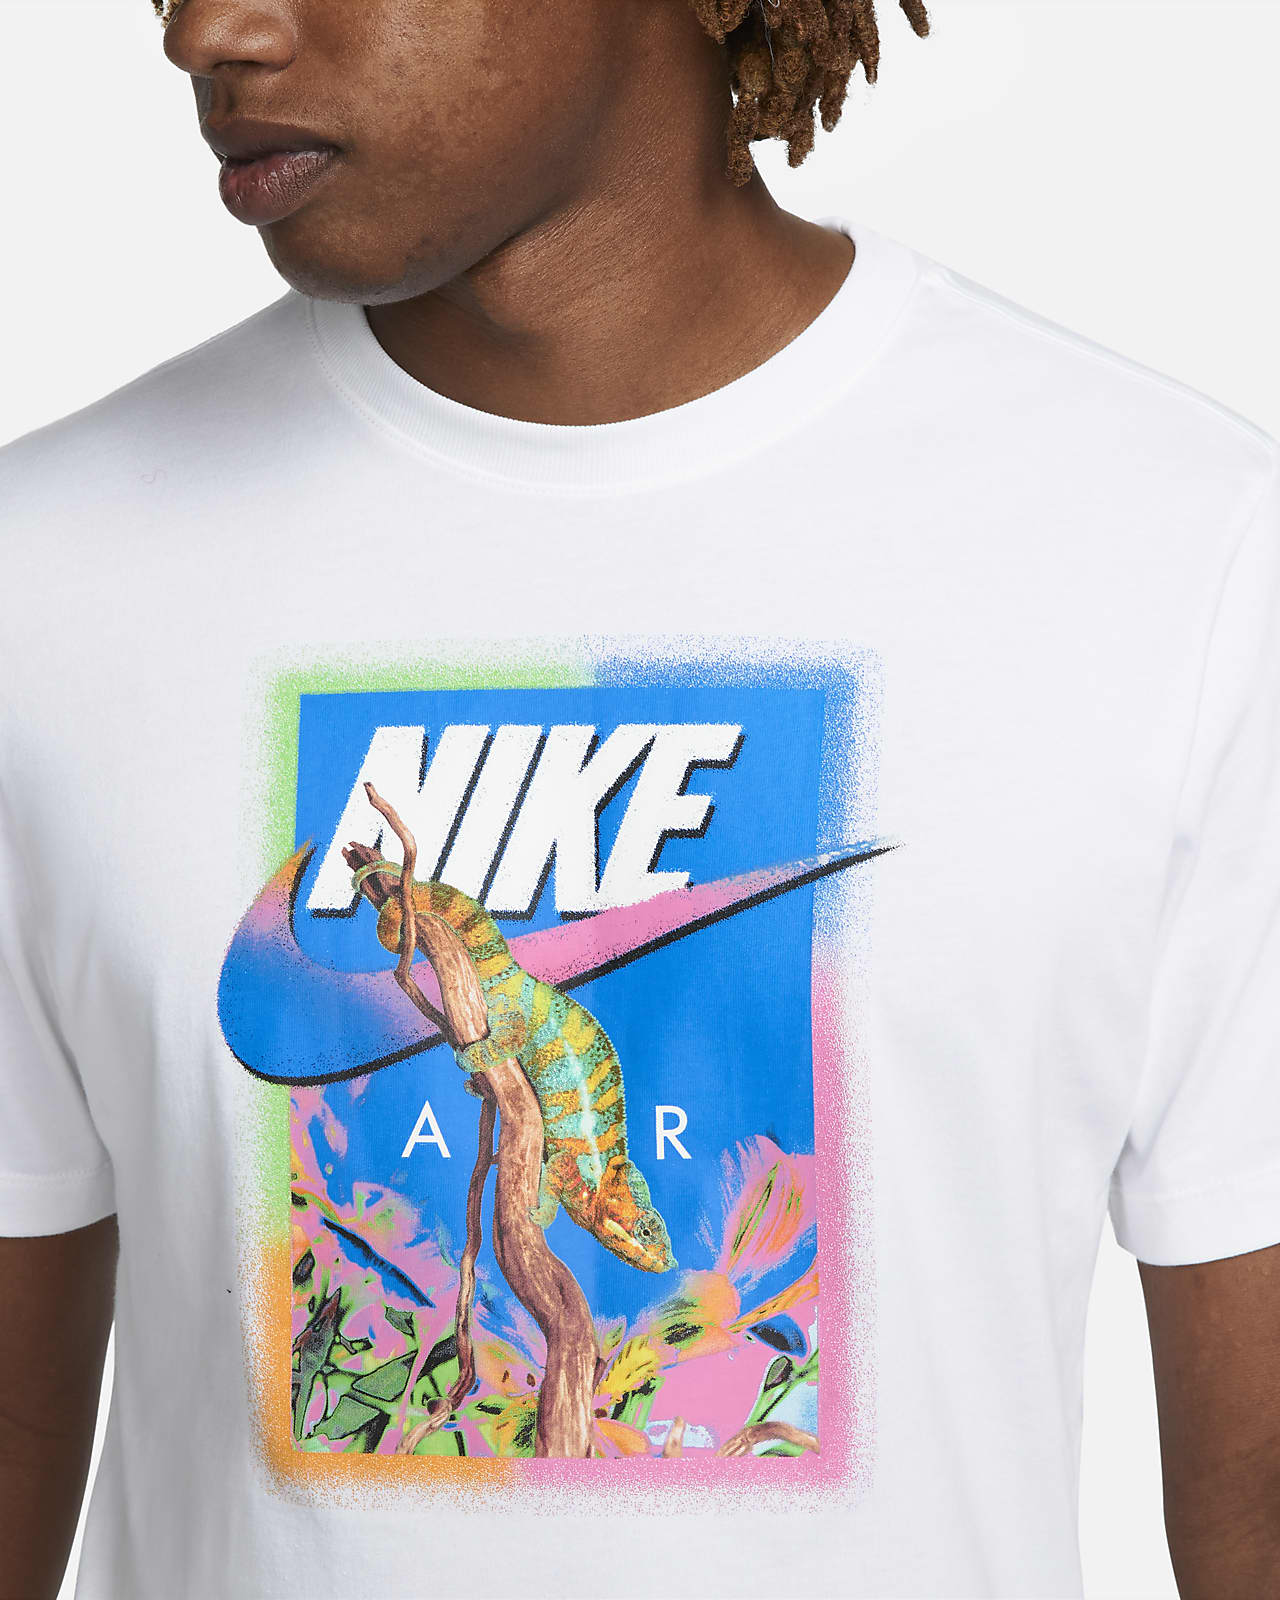 Nike Sportswear Shirt